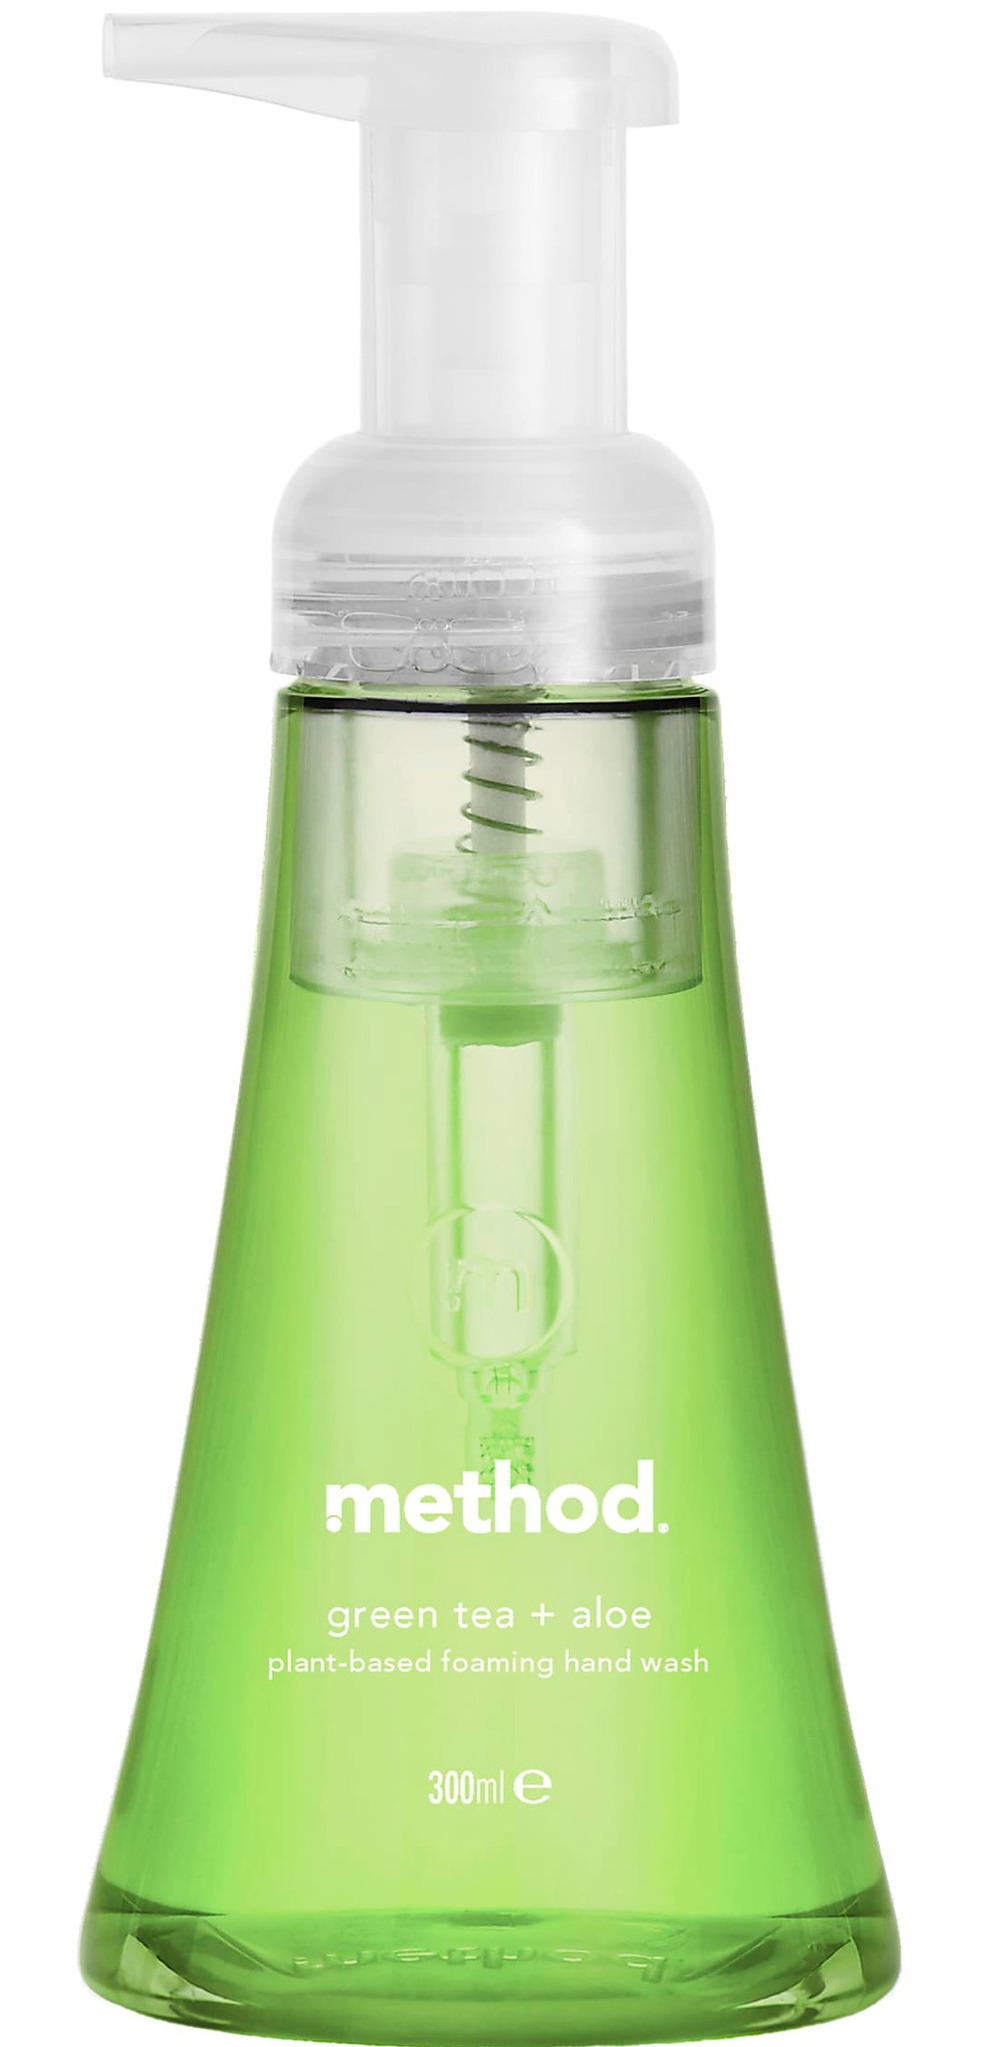 Method Foaming Hand Wash. Plant-based, Biodegradable Ingredients Inc. Green Tea + Aloe